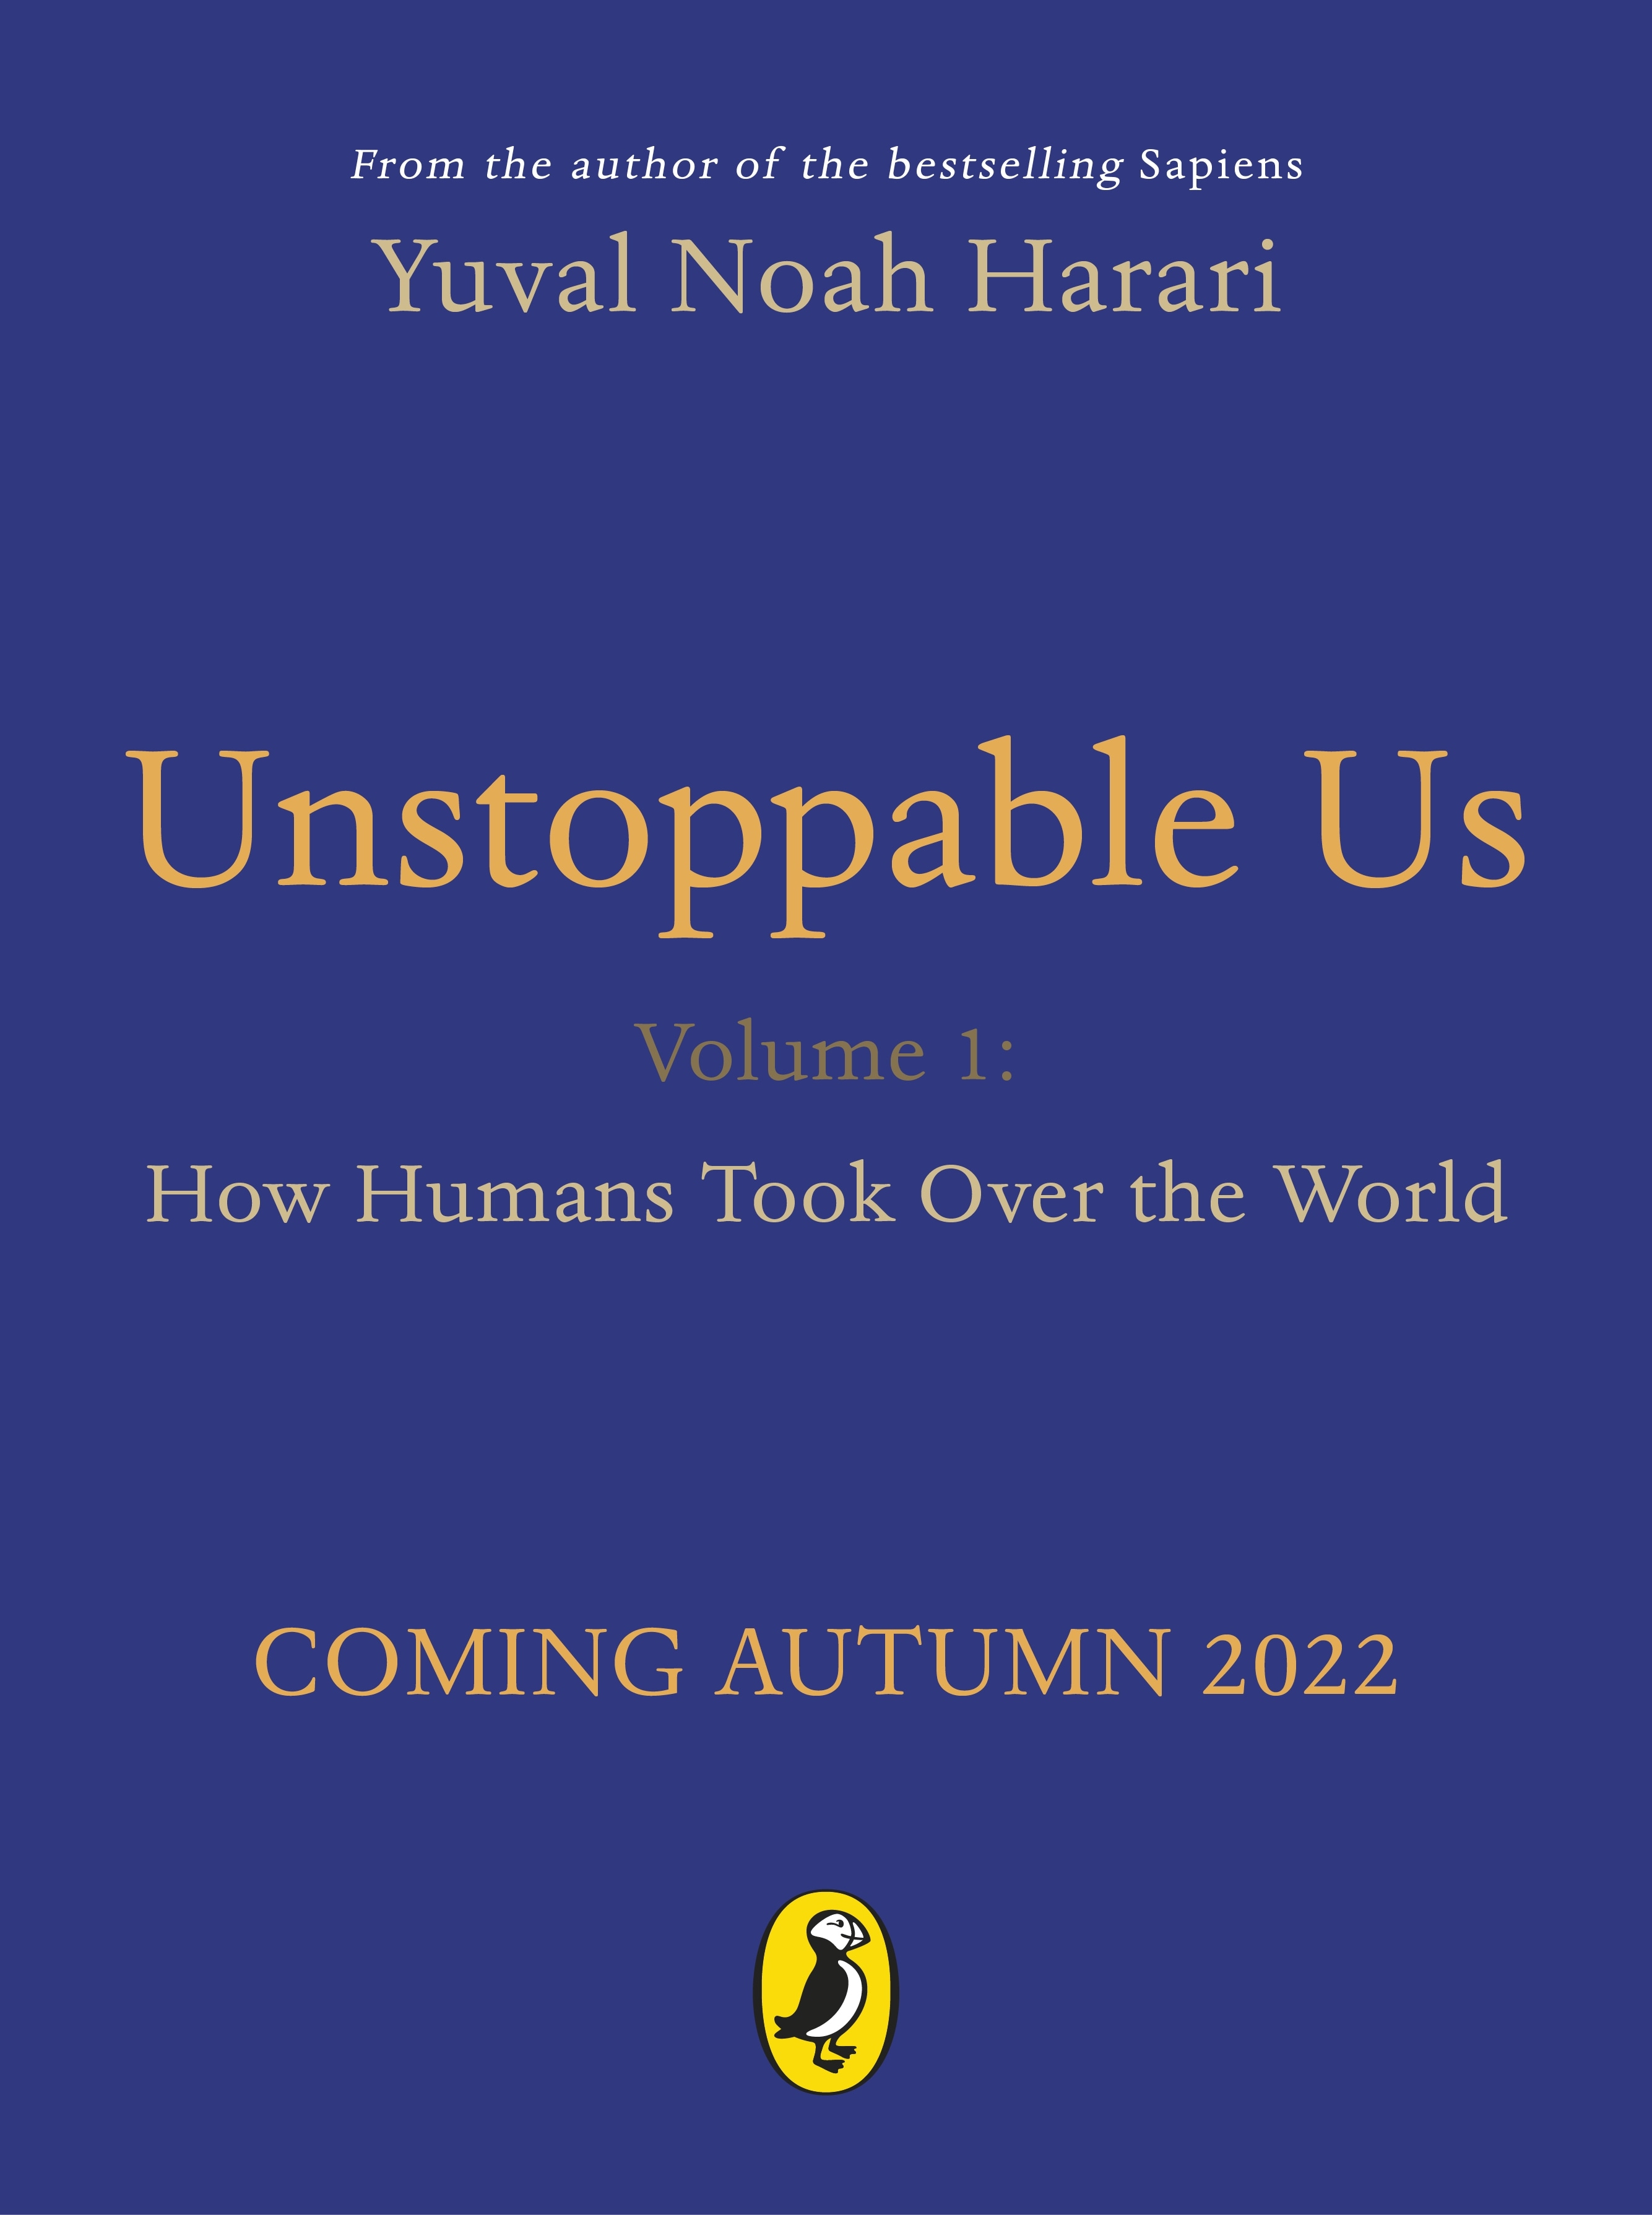 Book “Unstoppable Us” by Yuval Noah Harari — October 20, 2022